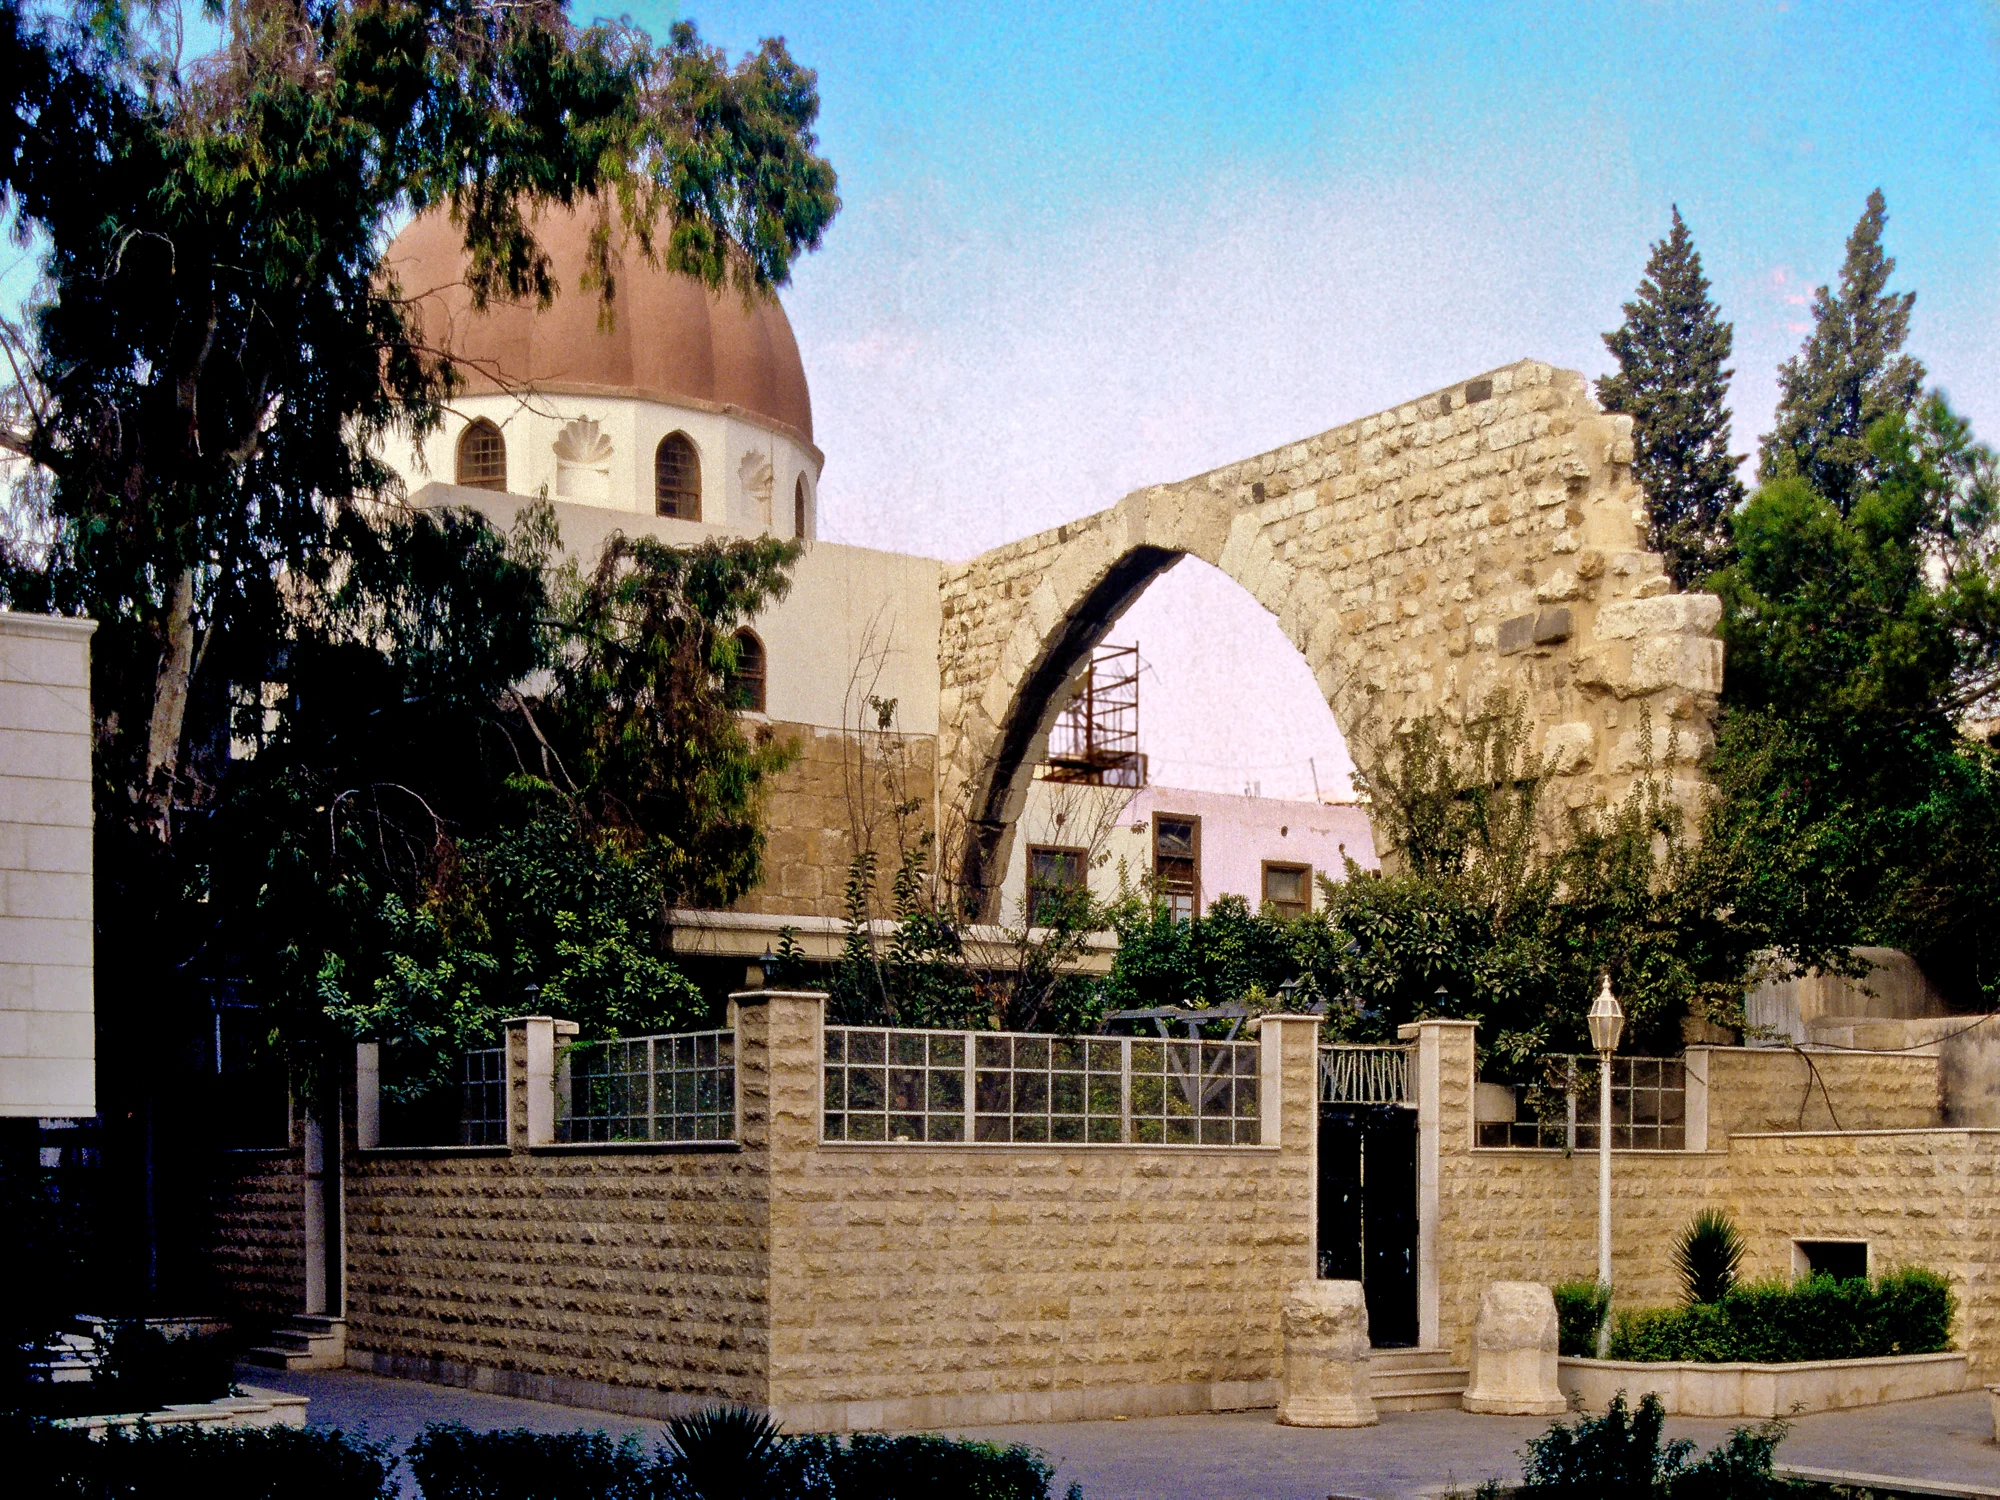 The dome of Maqam Salah ad-Din al-Ayyubi